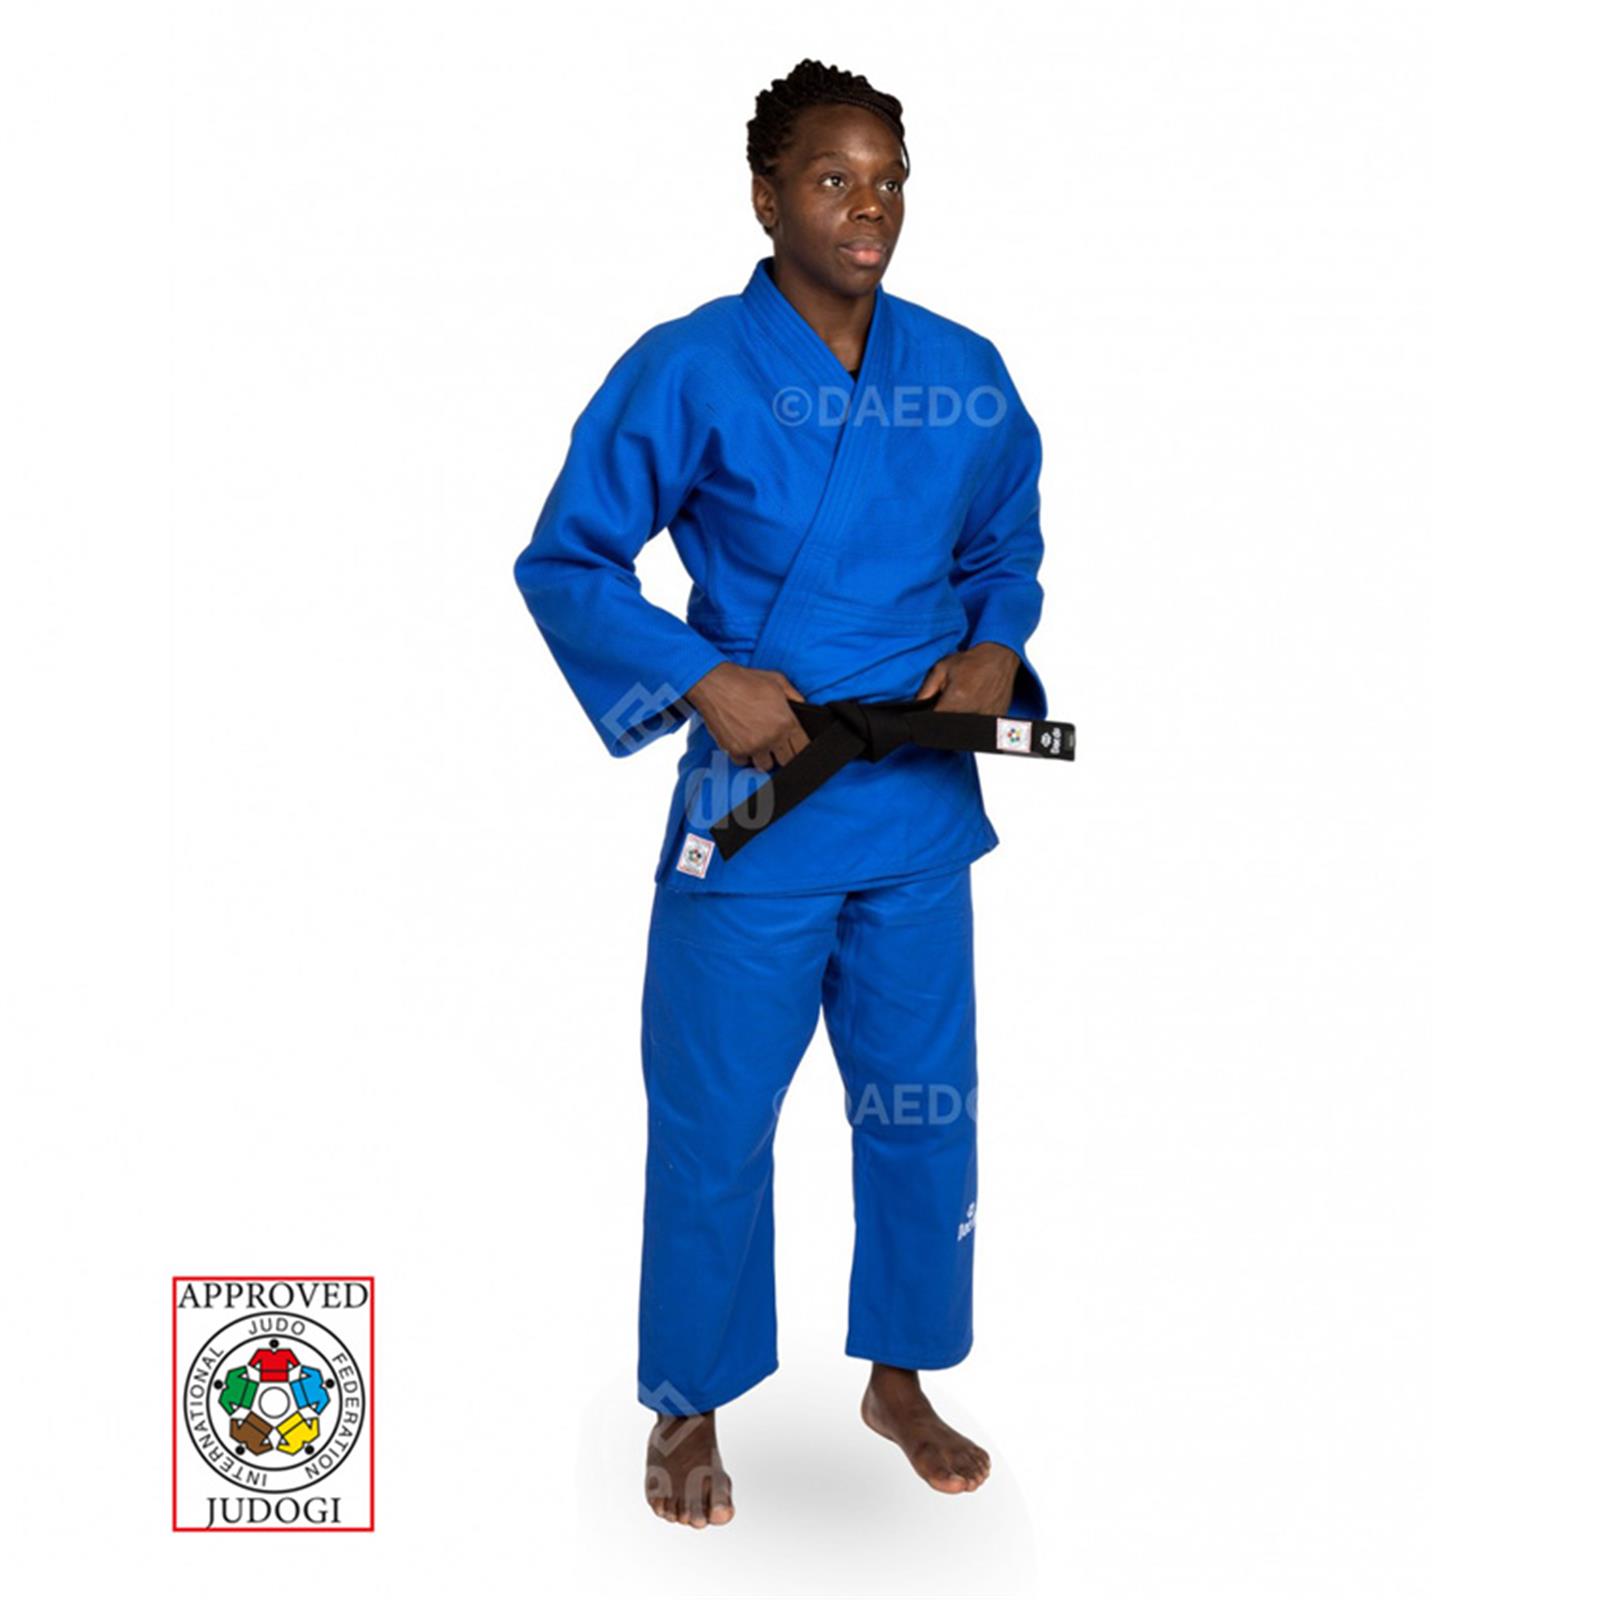 Dae Do Judogi da Competizione Blu Omologato IJF (6,5° - 195cm - BLU)